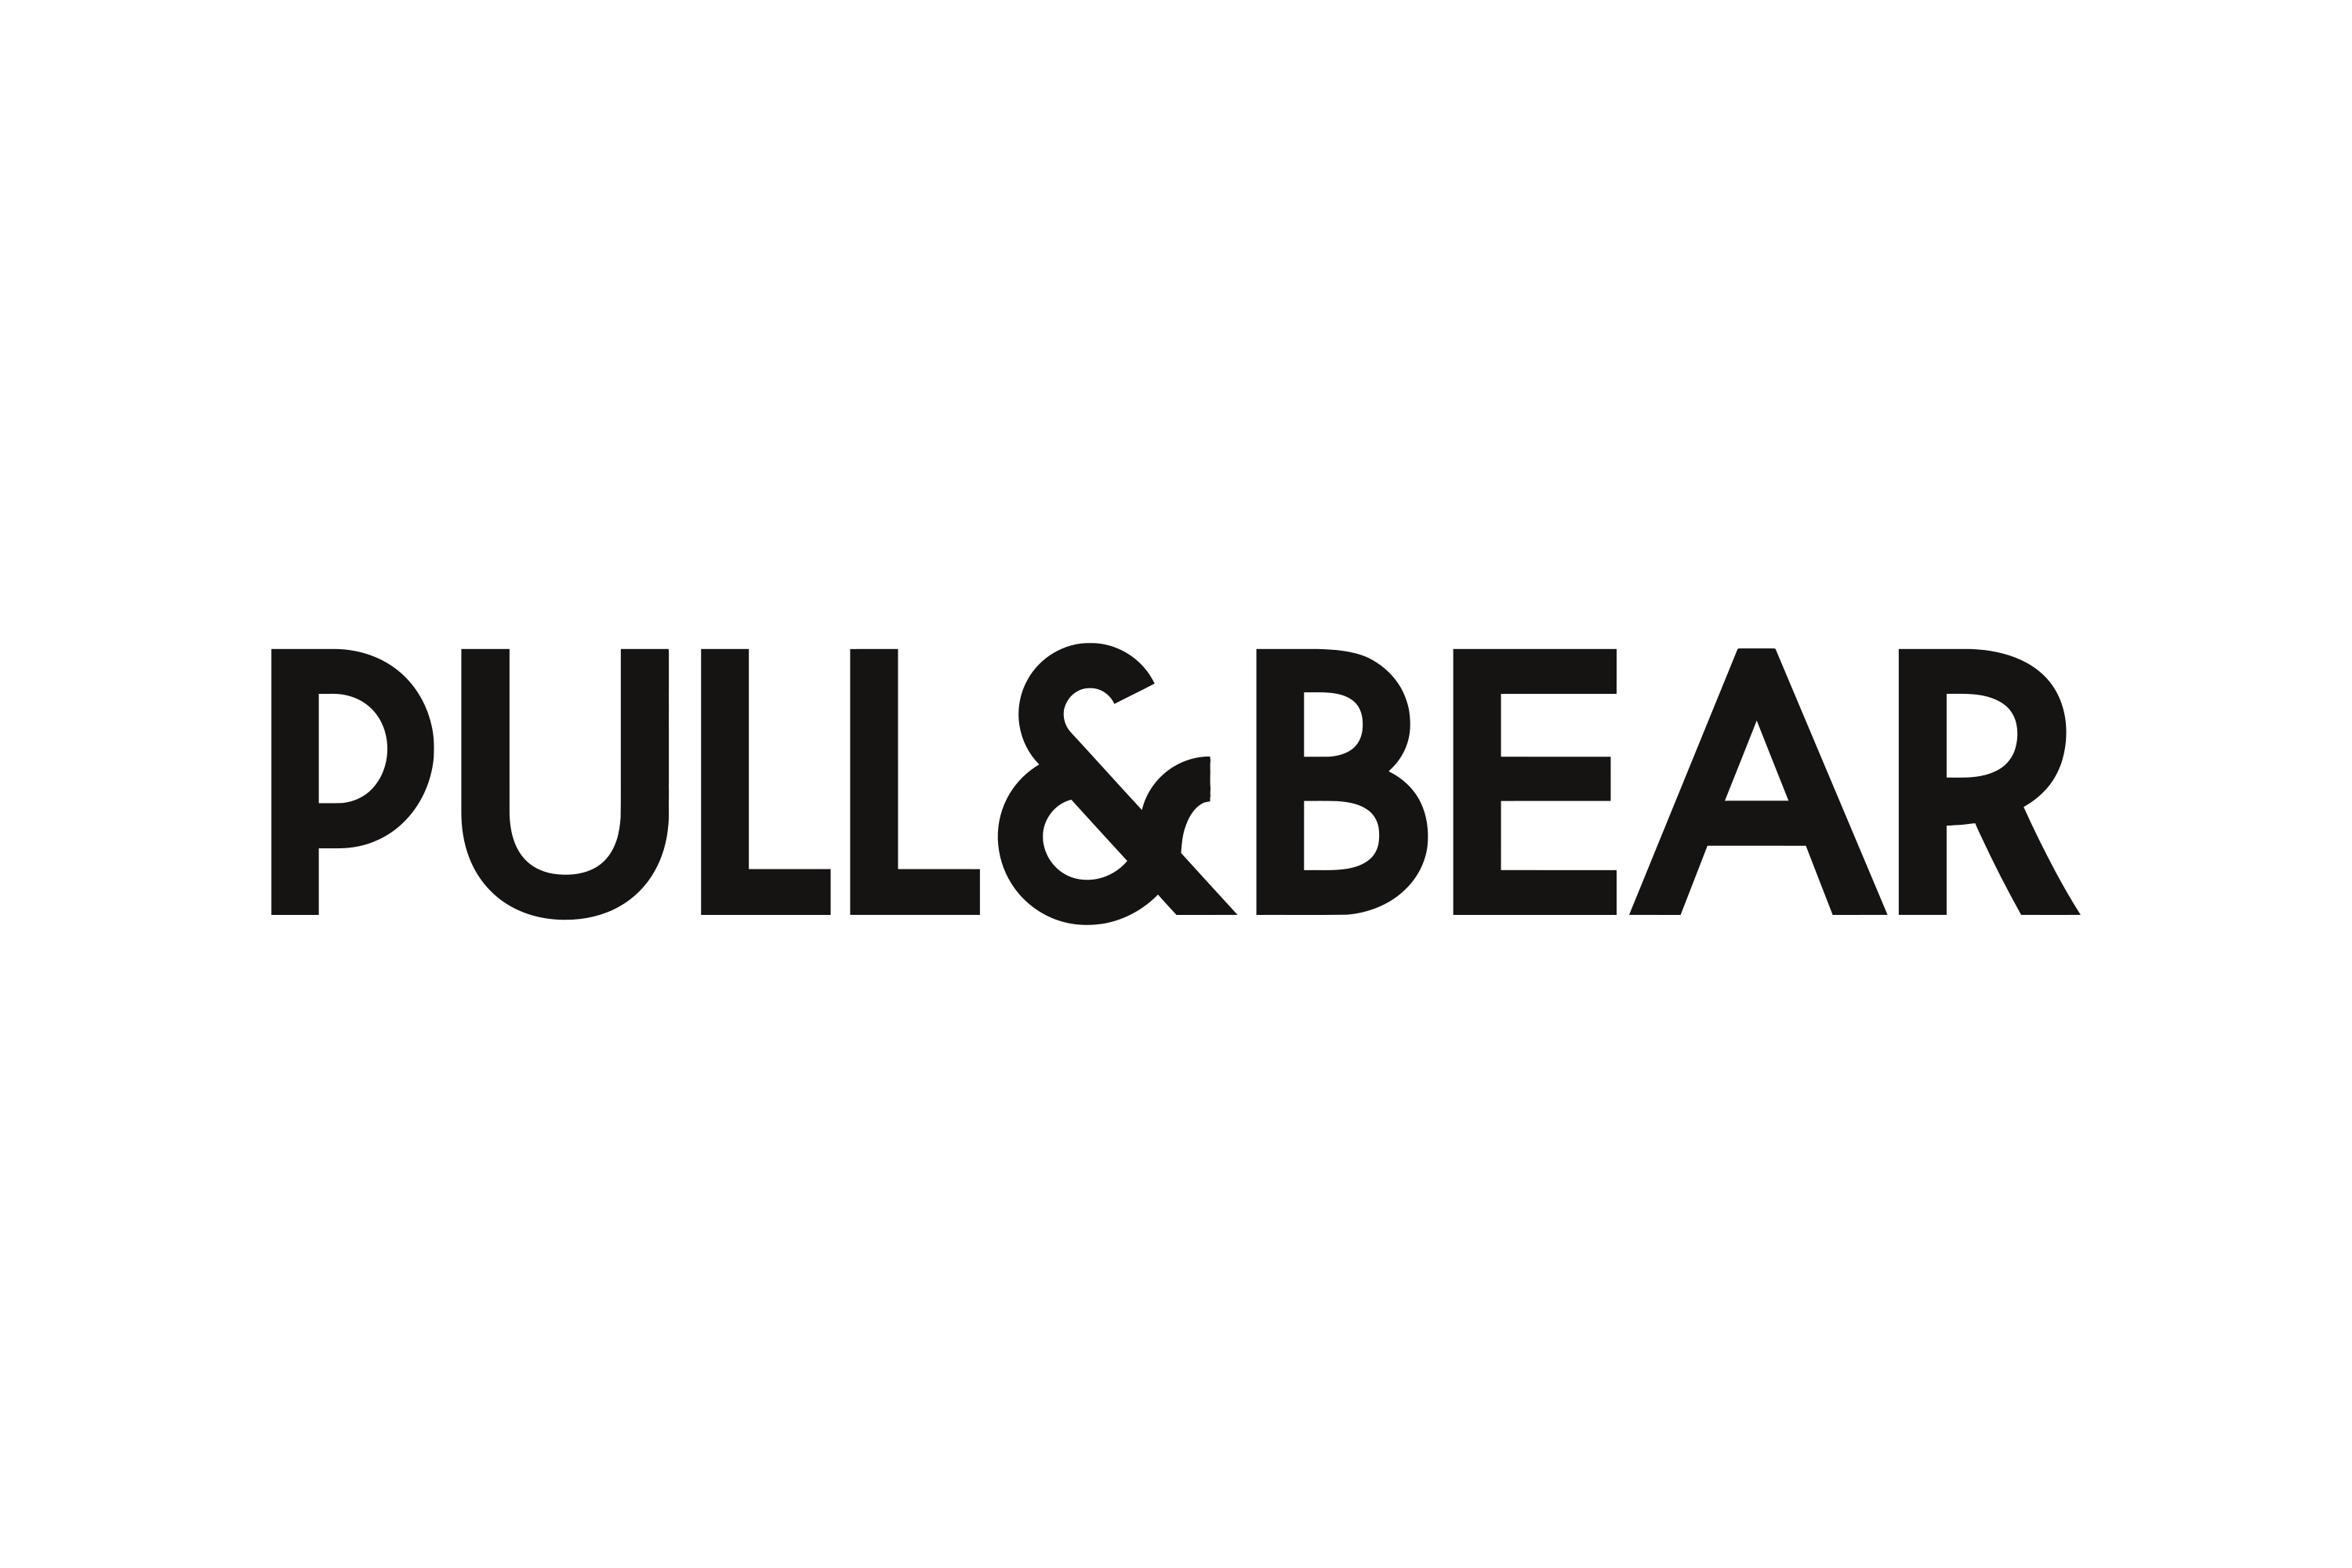 www.pullandbear.com